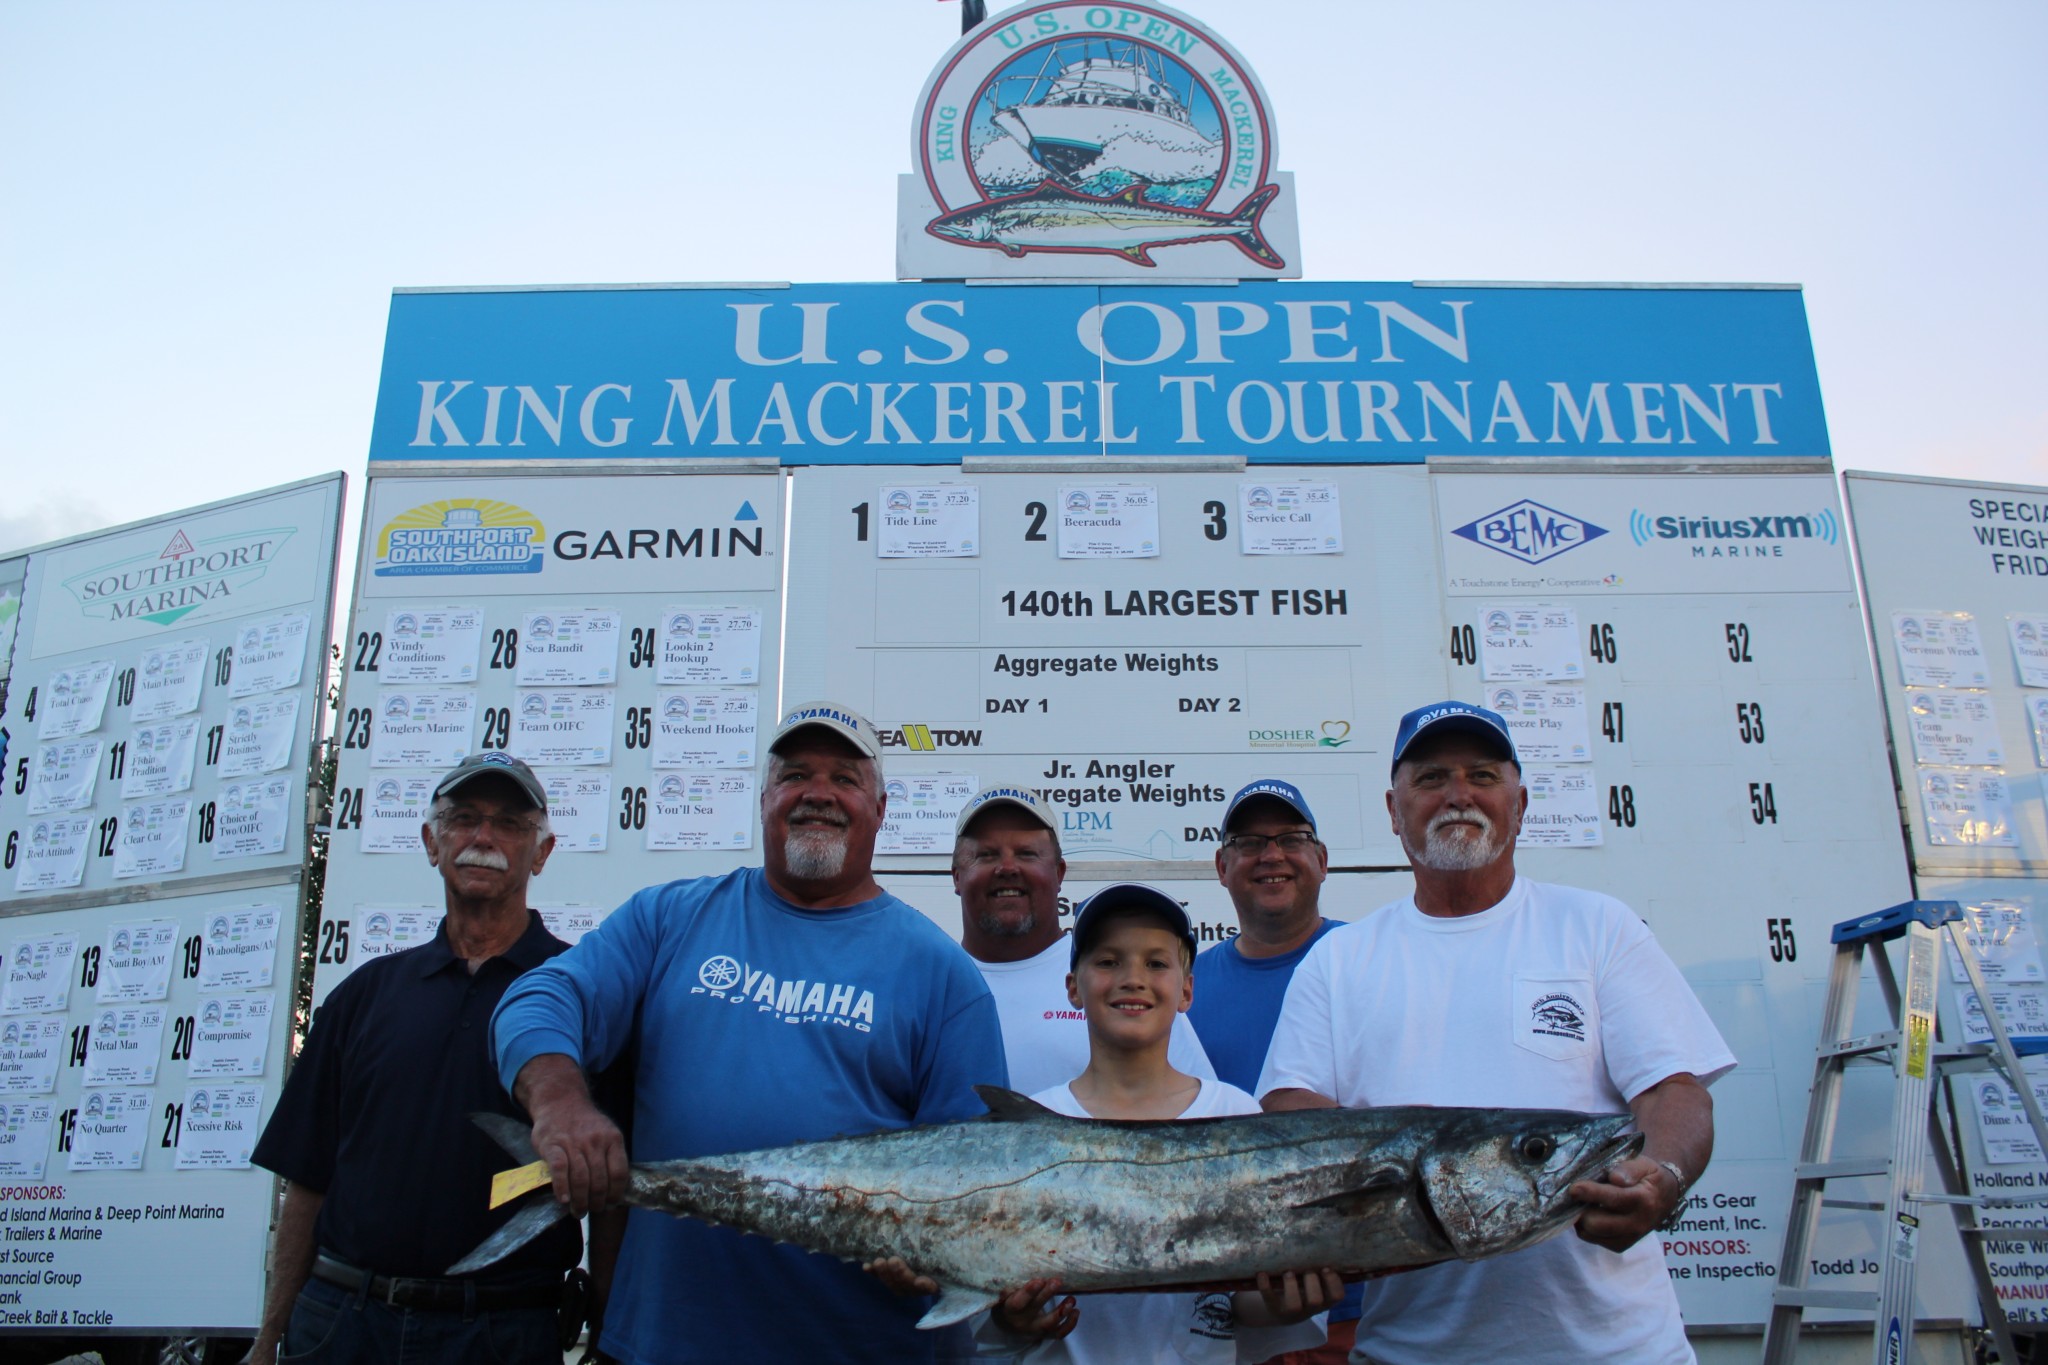 44th Annual US Open King Mackerel Tournament happening this week WWAYTV3